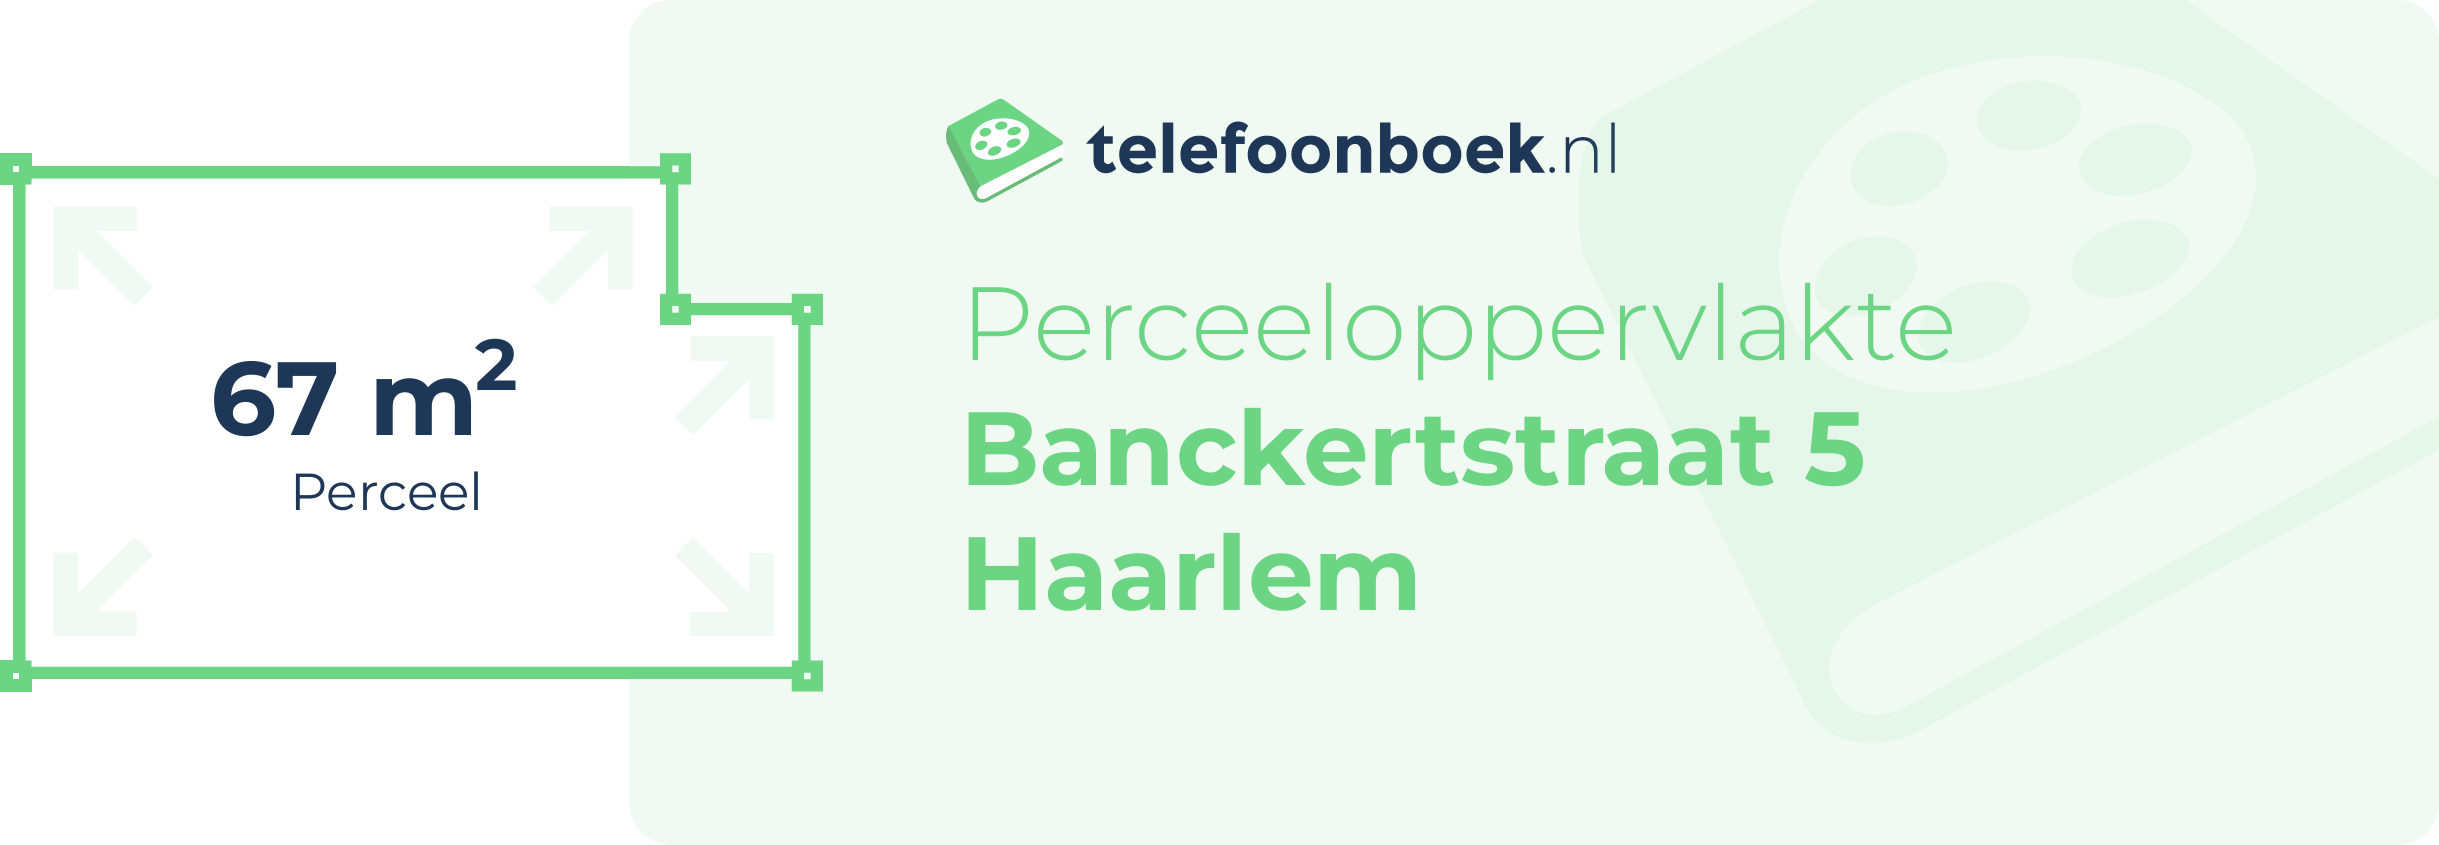 Perceeloppervlakte Banckertstraat 5 Haarlem